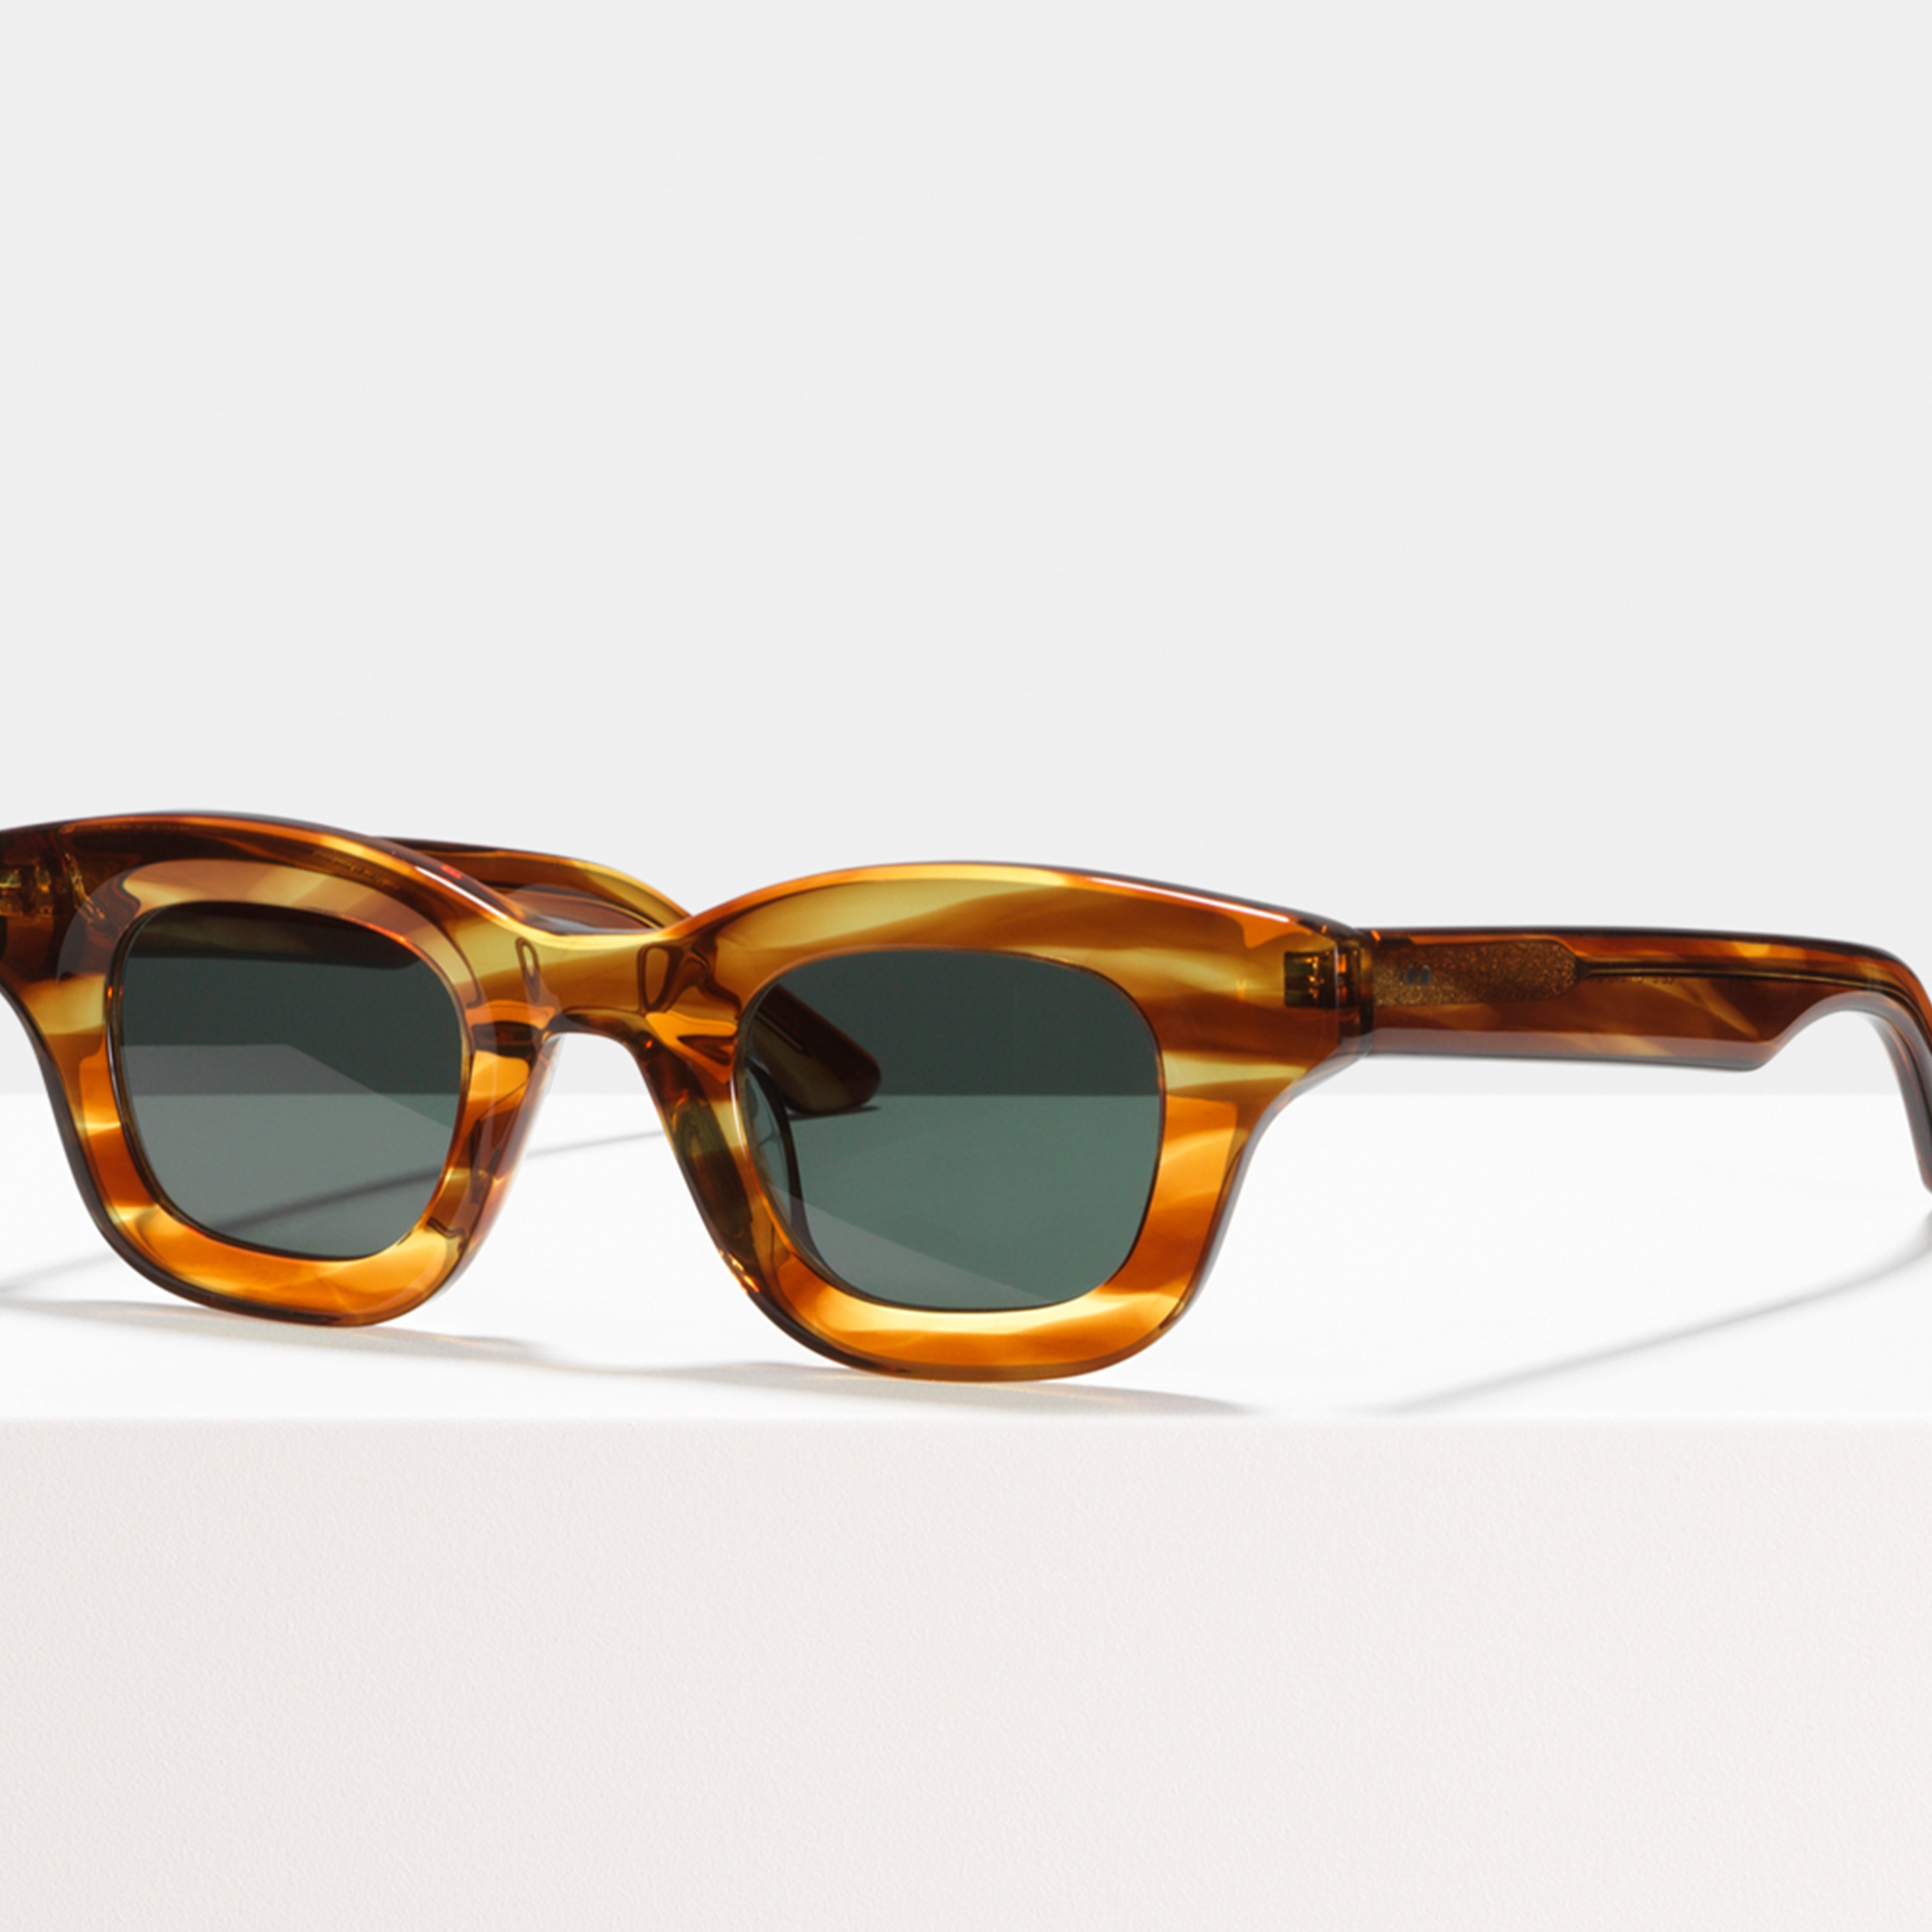 Ace & Tate Gafas de sol |  Acetato in Marrón, Naranja